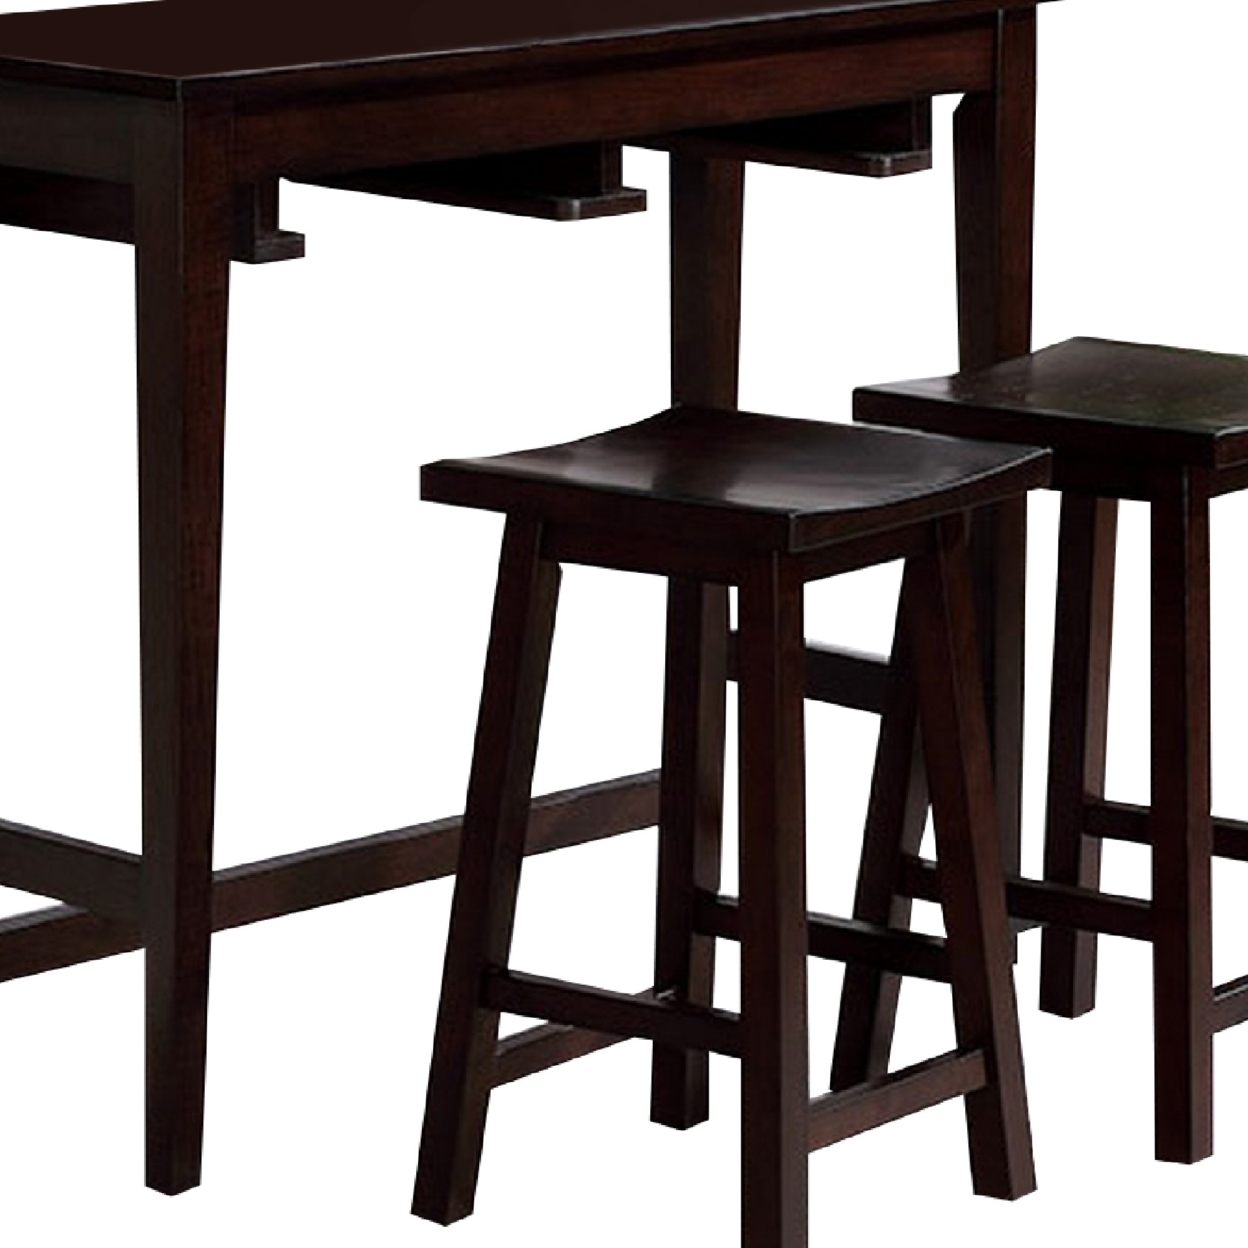 3 Piece Bar Table Set With Contoured Seat, Espresso Brown- Saltoro Sherpi